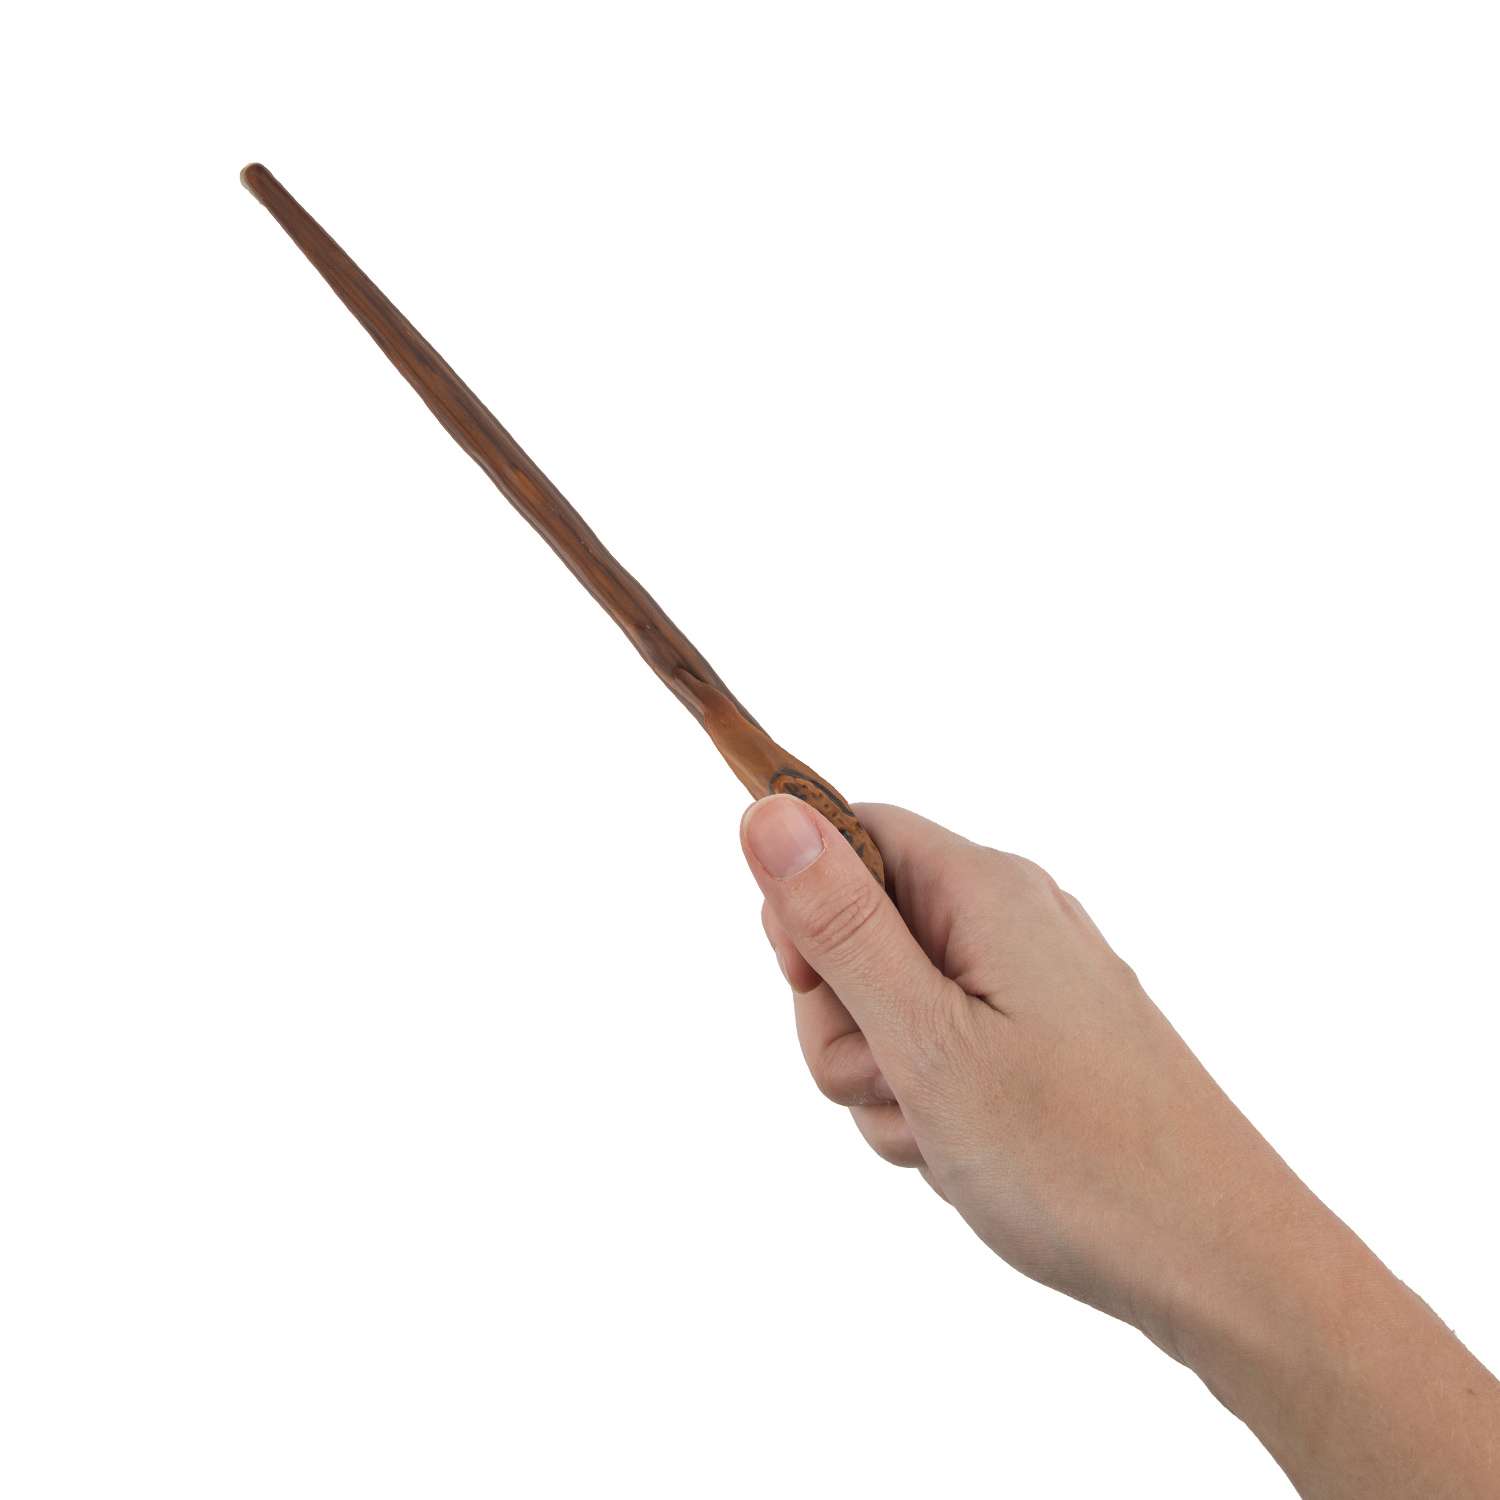 Ручка Harry Potter в виде палочки Рона Уизли 25 см с подставкой и закладкой - фото 4